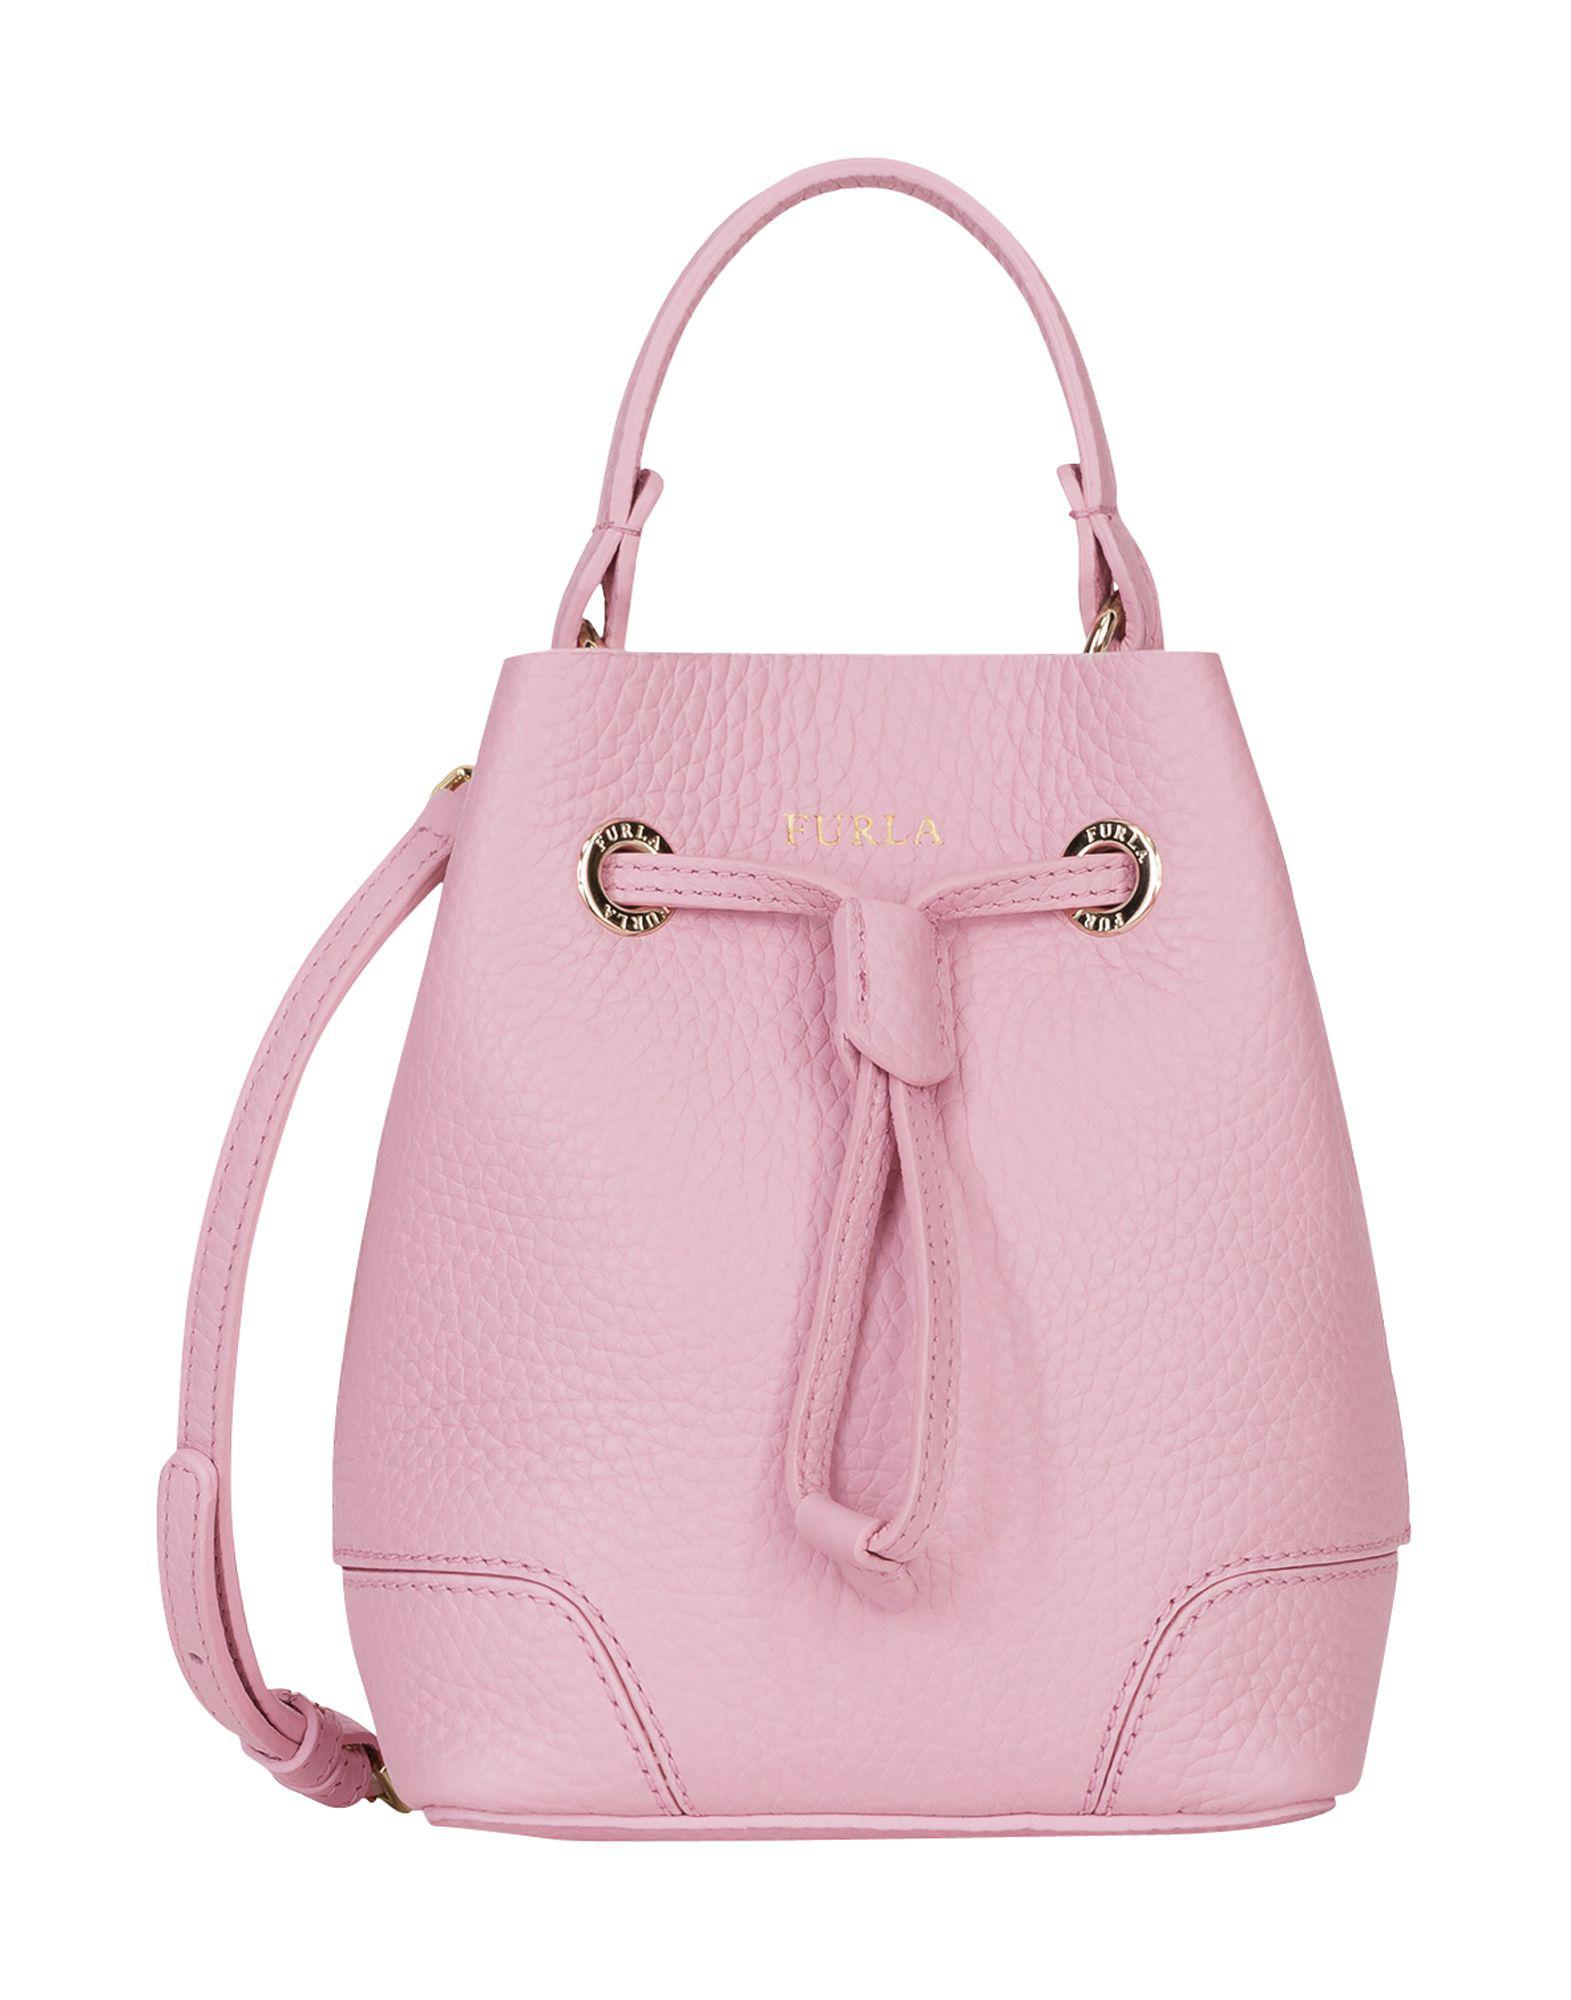 Furla Leather Handbag in Pink - Lyst